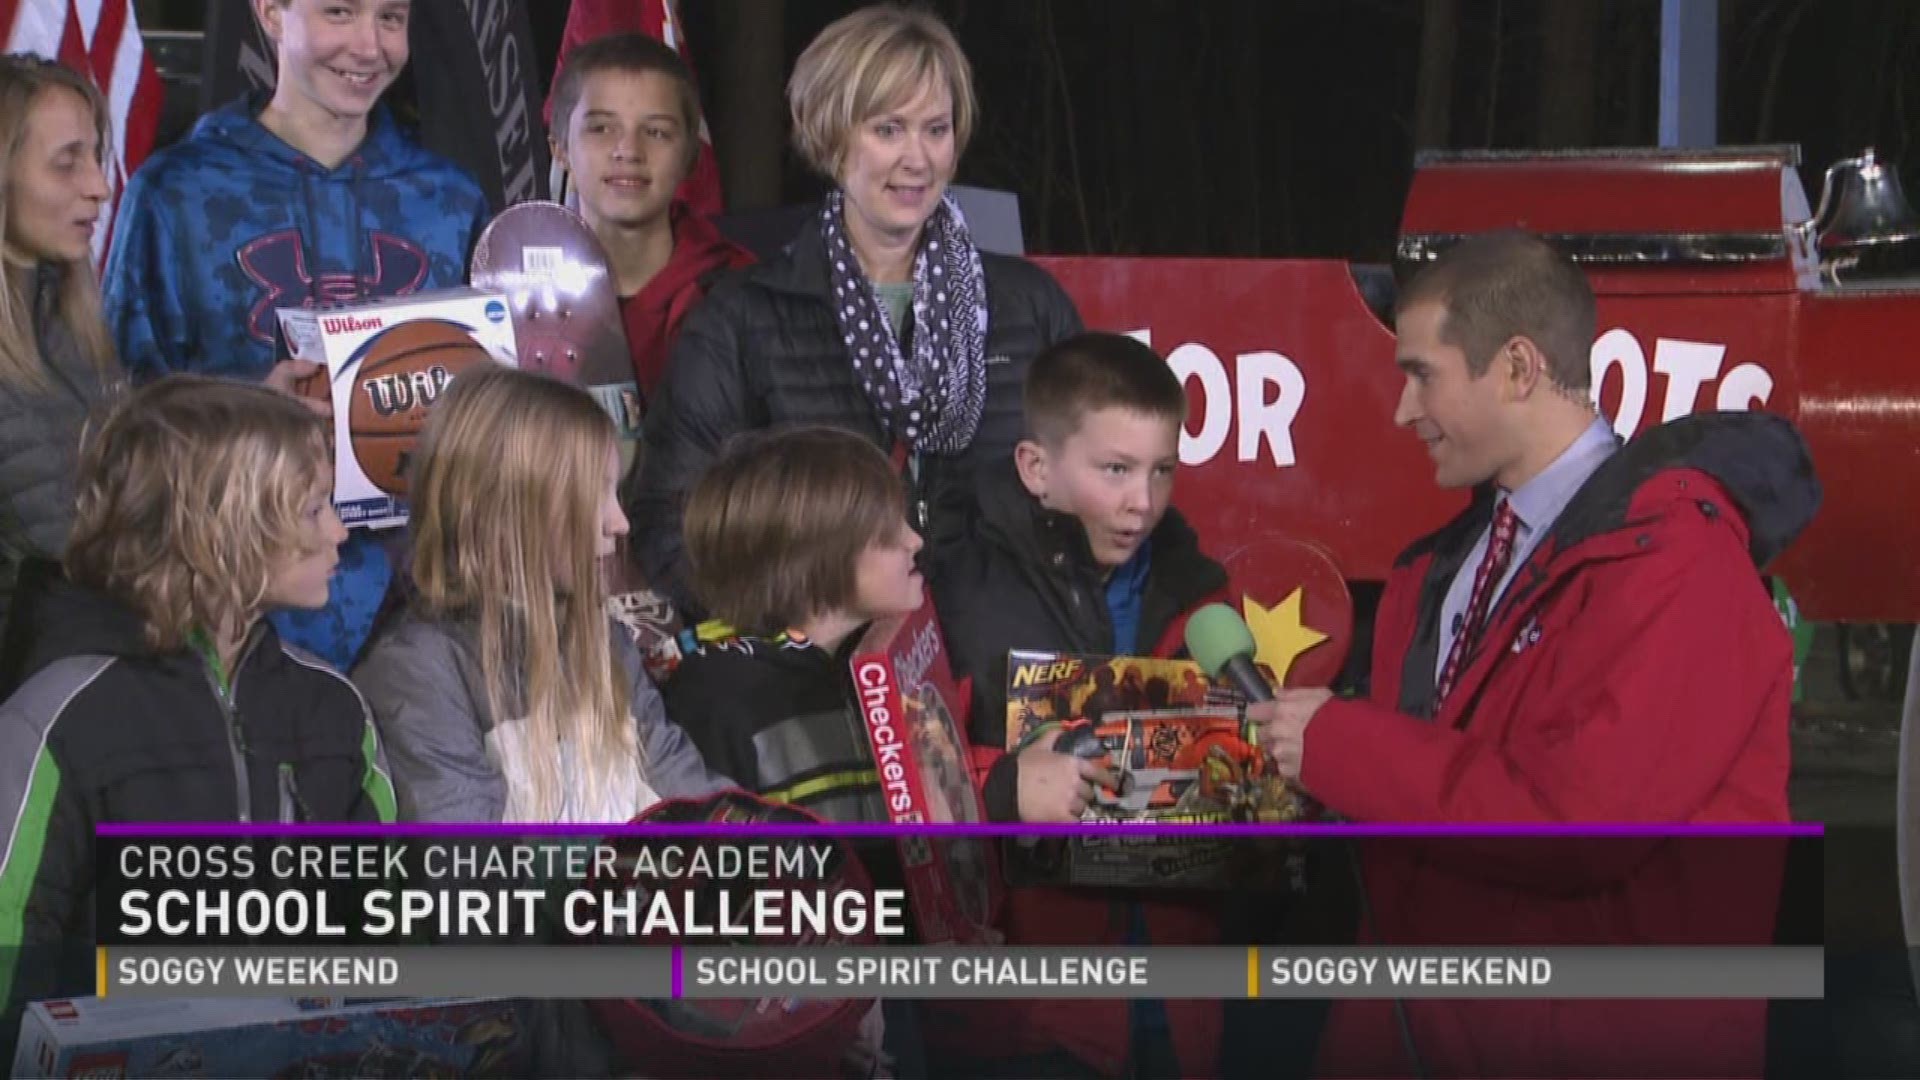 School Spirit Challenge - Cross Creek Charter Academy Wzzm13com